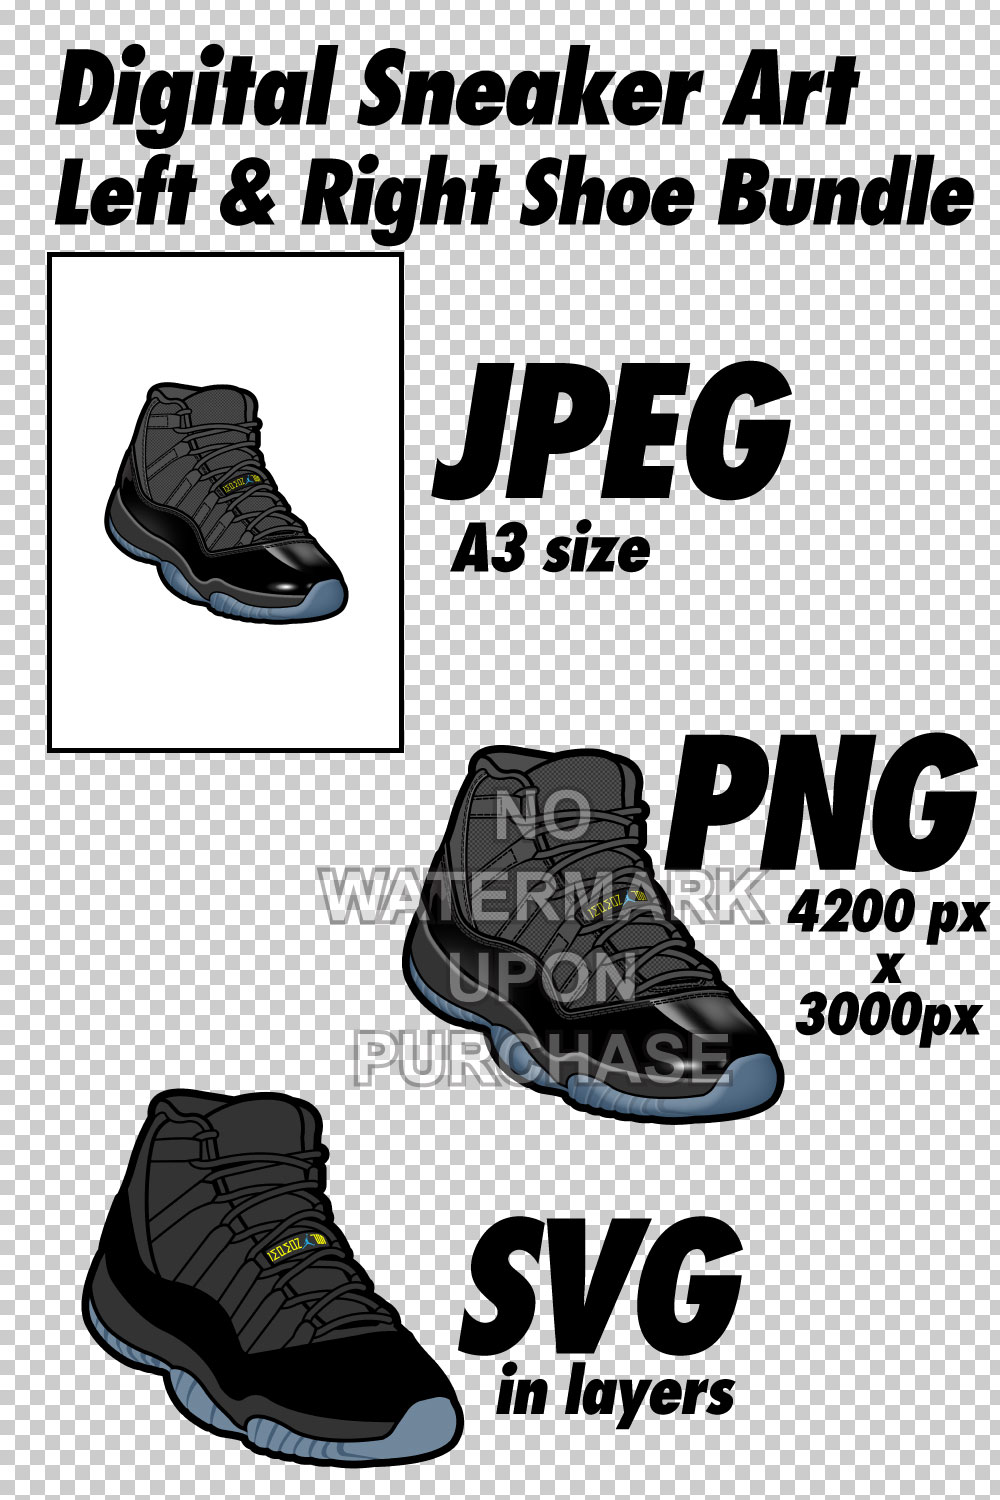 Air Jordan 11 Gamma Blue JPEG PNG SVG right & left shoe bundle Digital Download pinterest preview image.